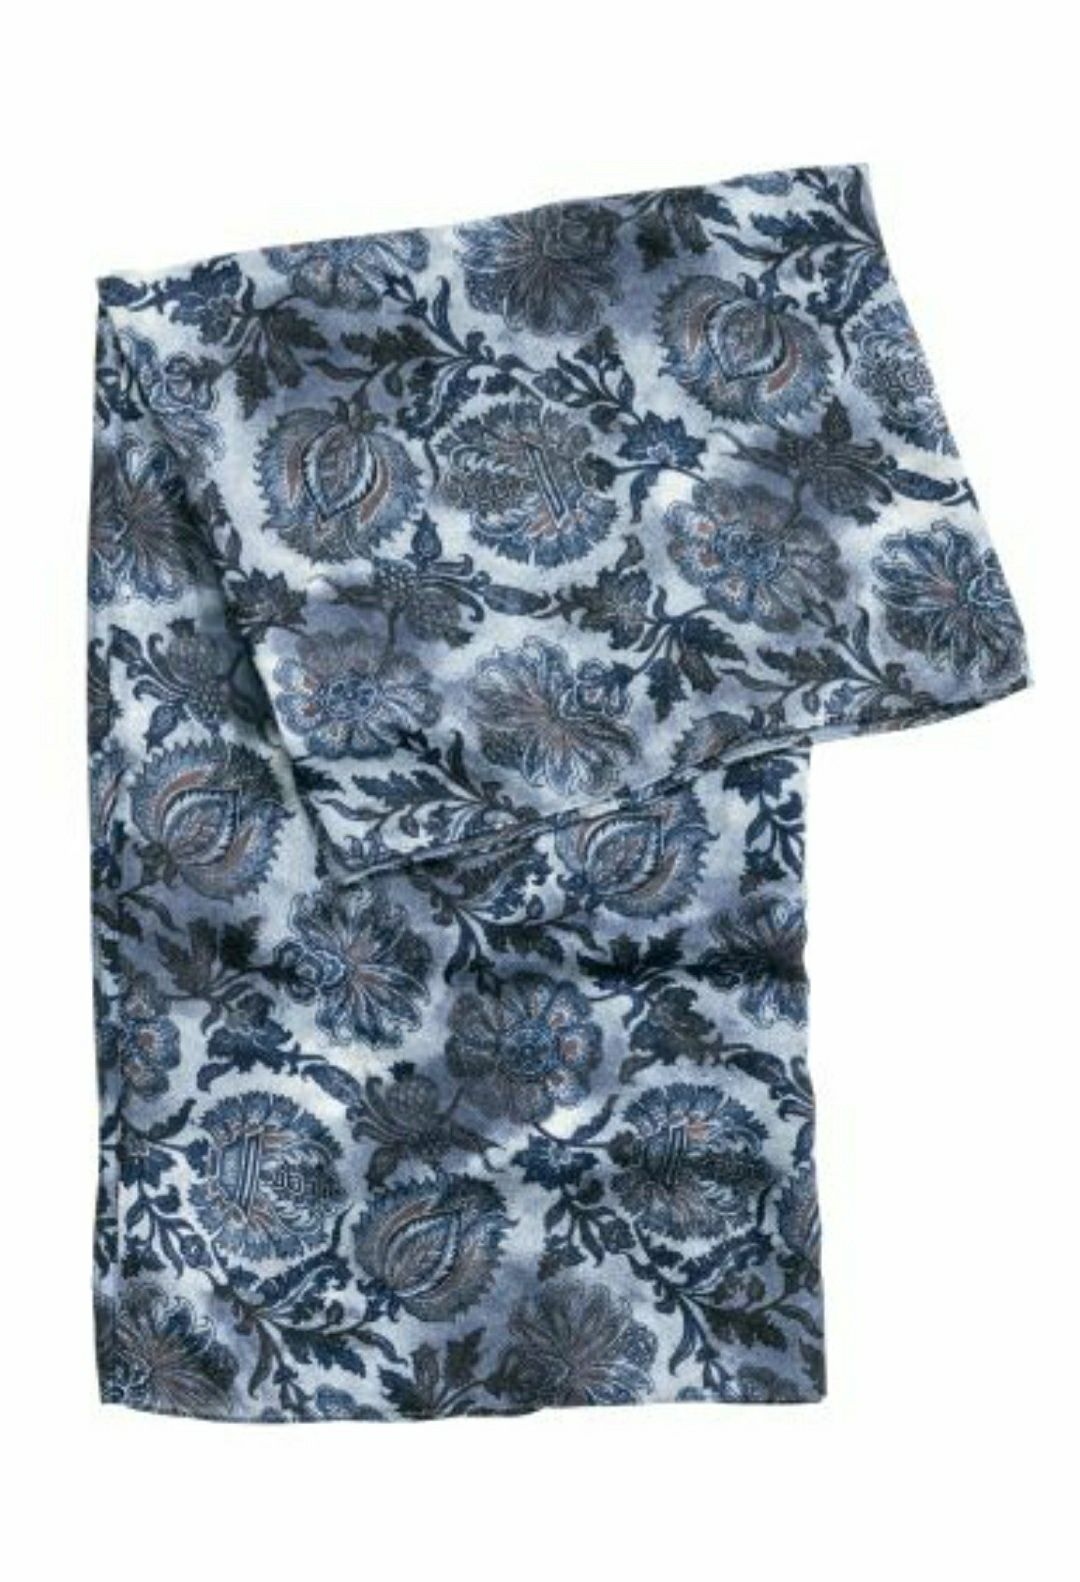 Esarfa H&M albastra print floral